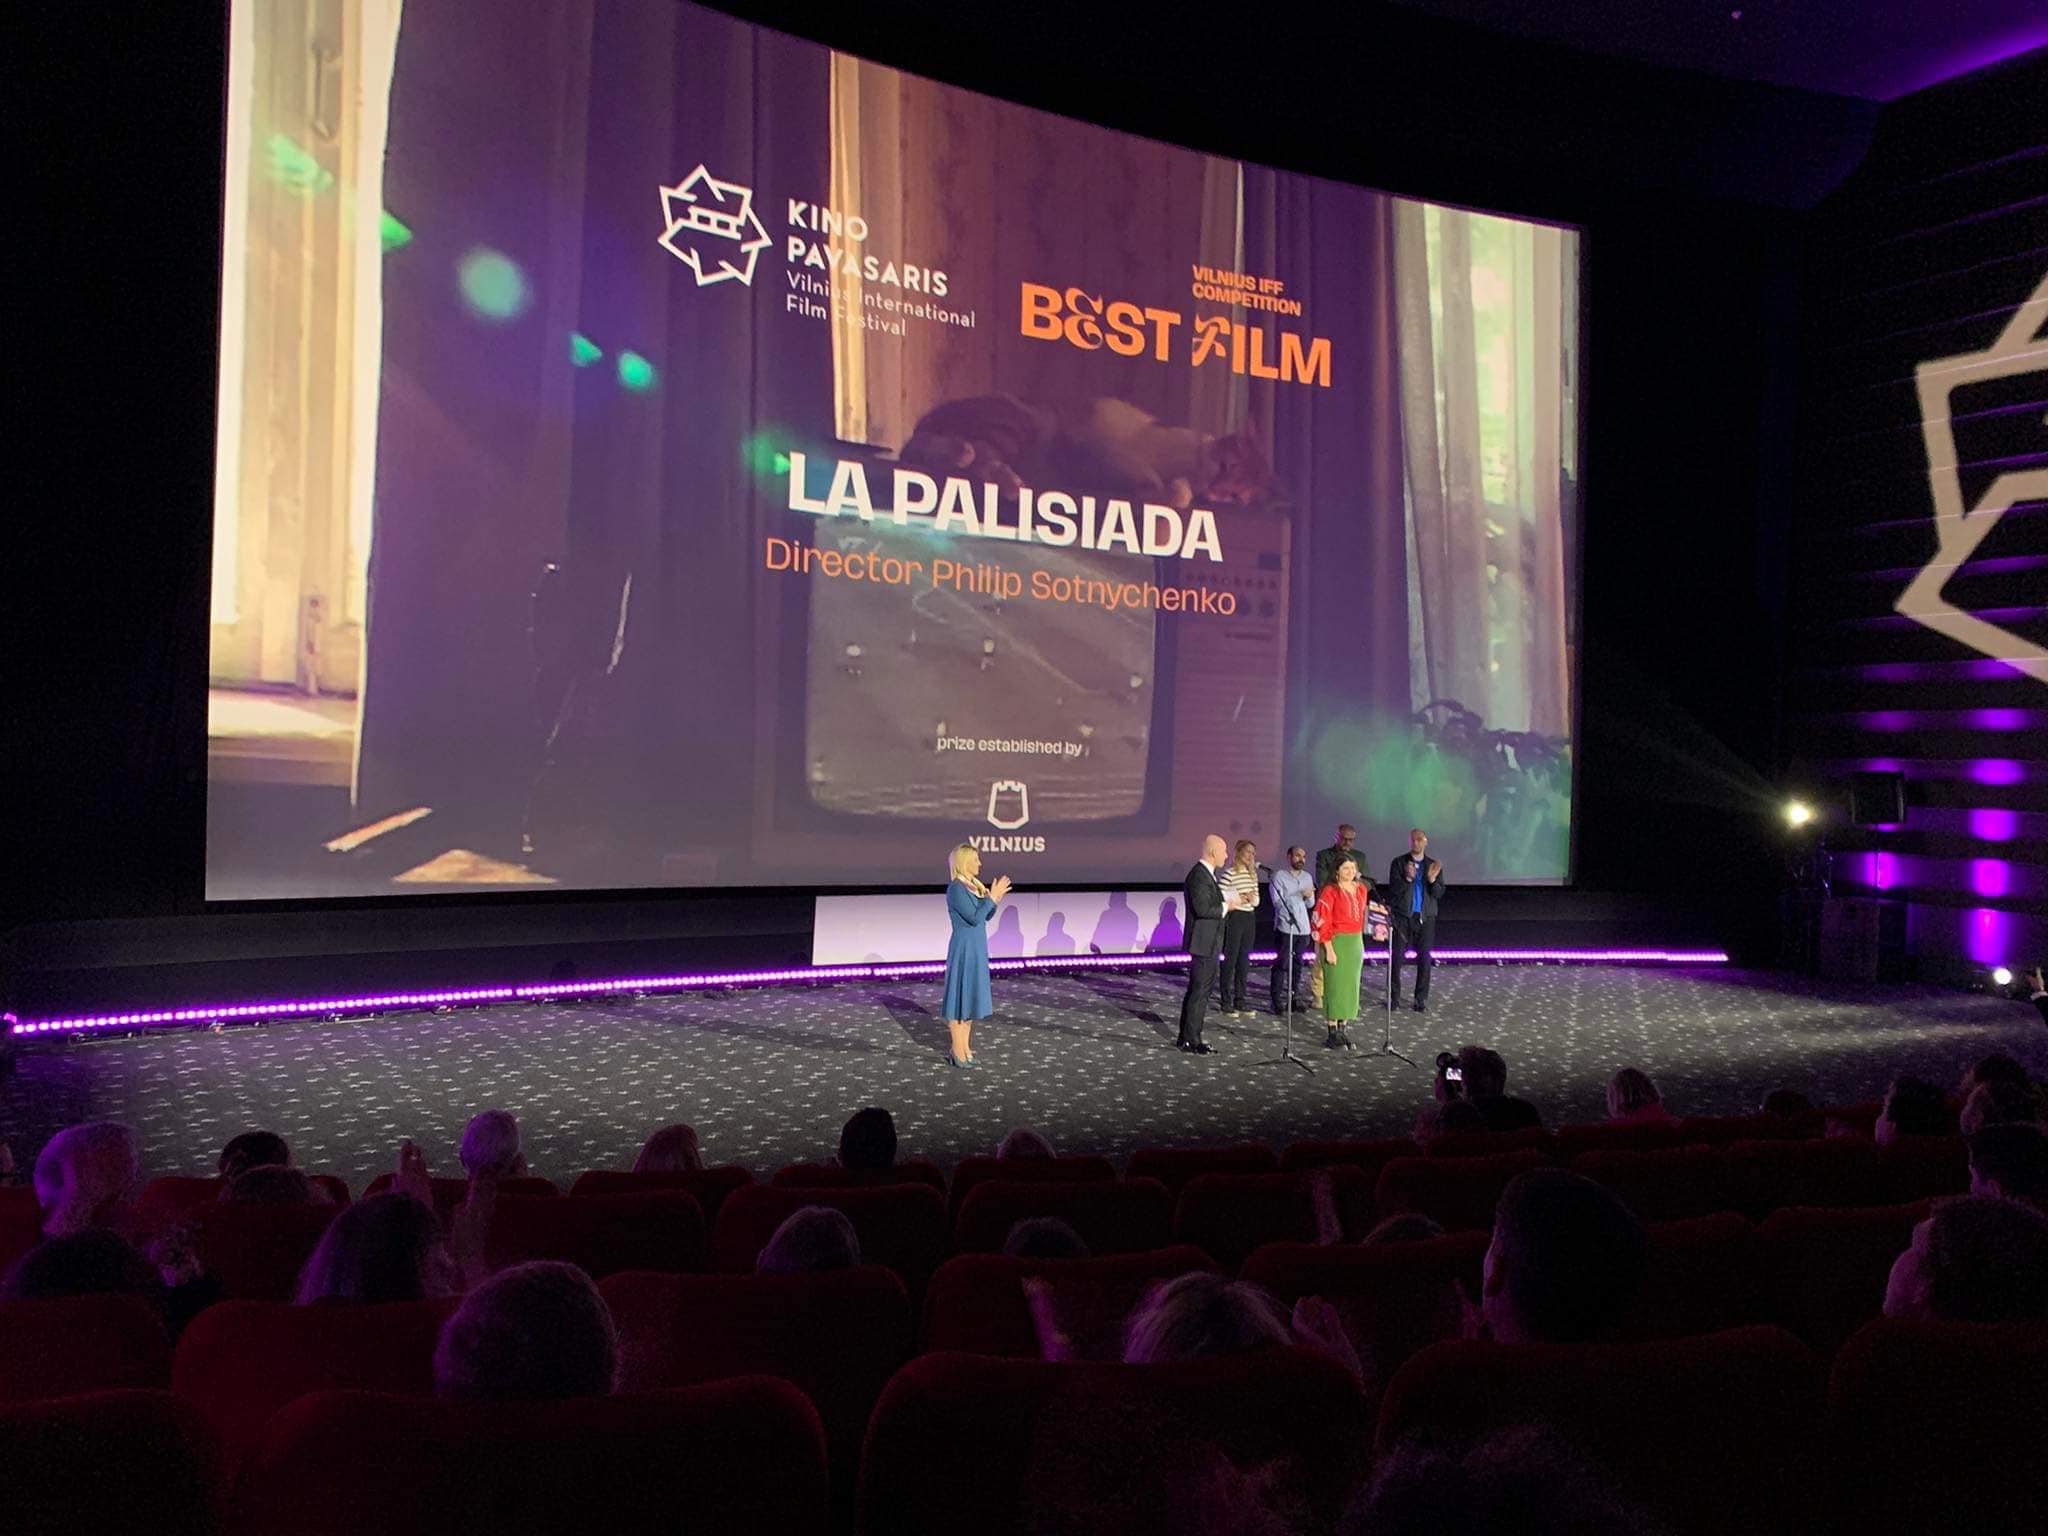 "La Palisiada" became the best film of the Vilnius International Film Festival